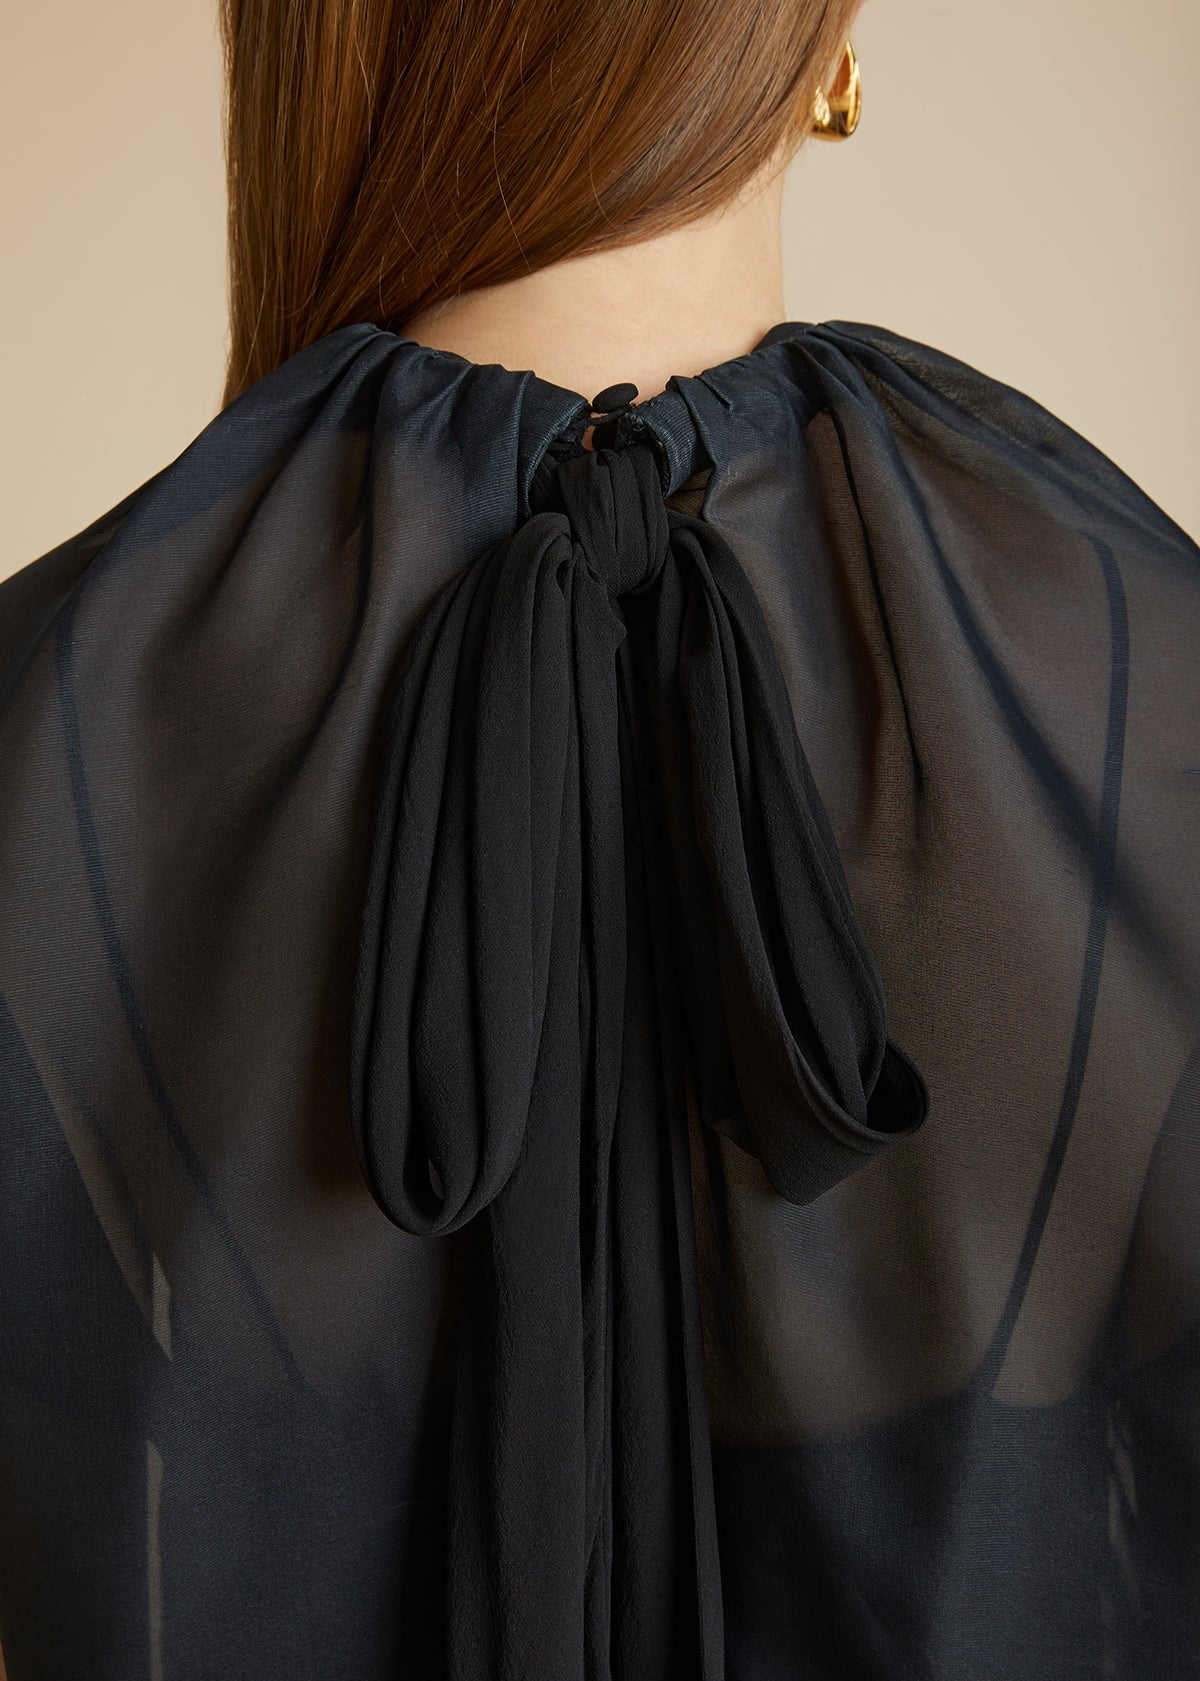 The Essie Dress in Black - 5